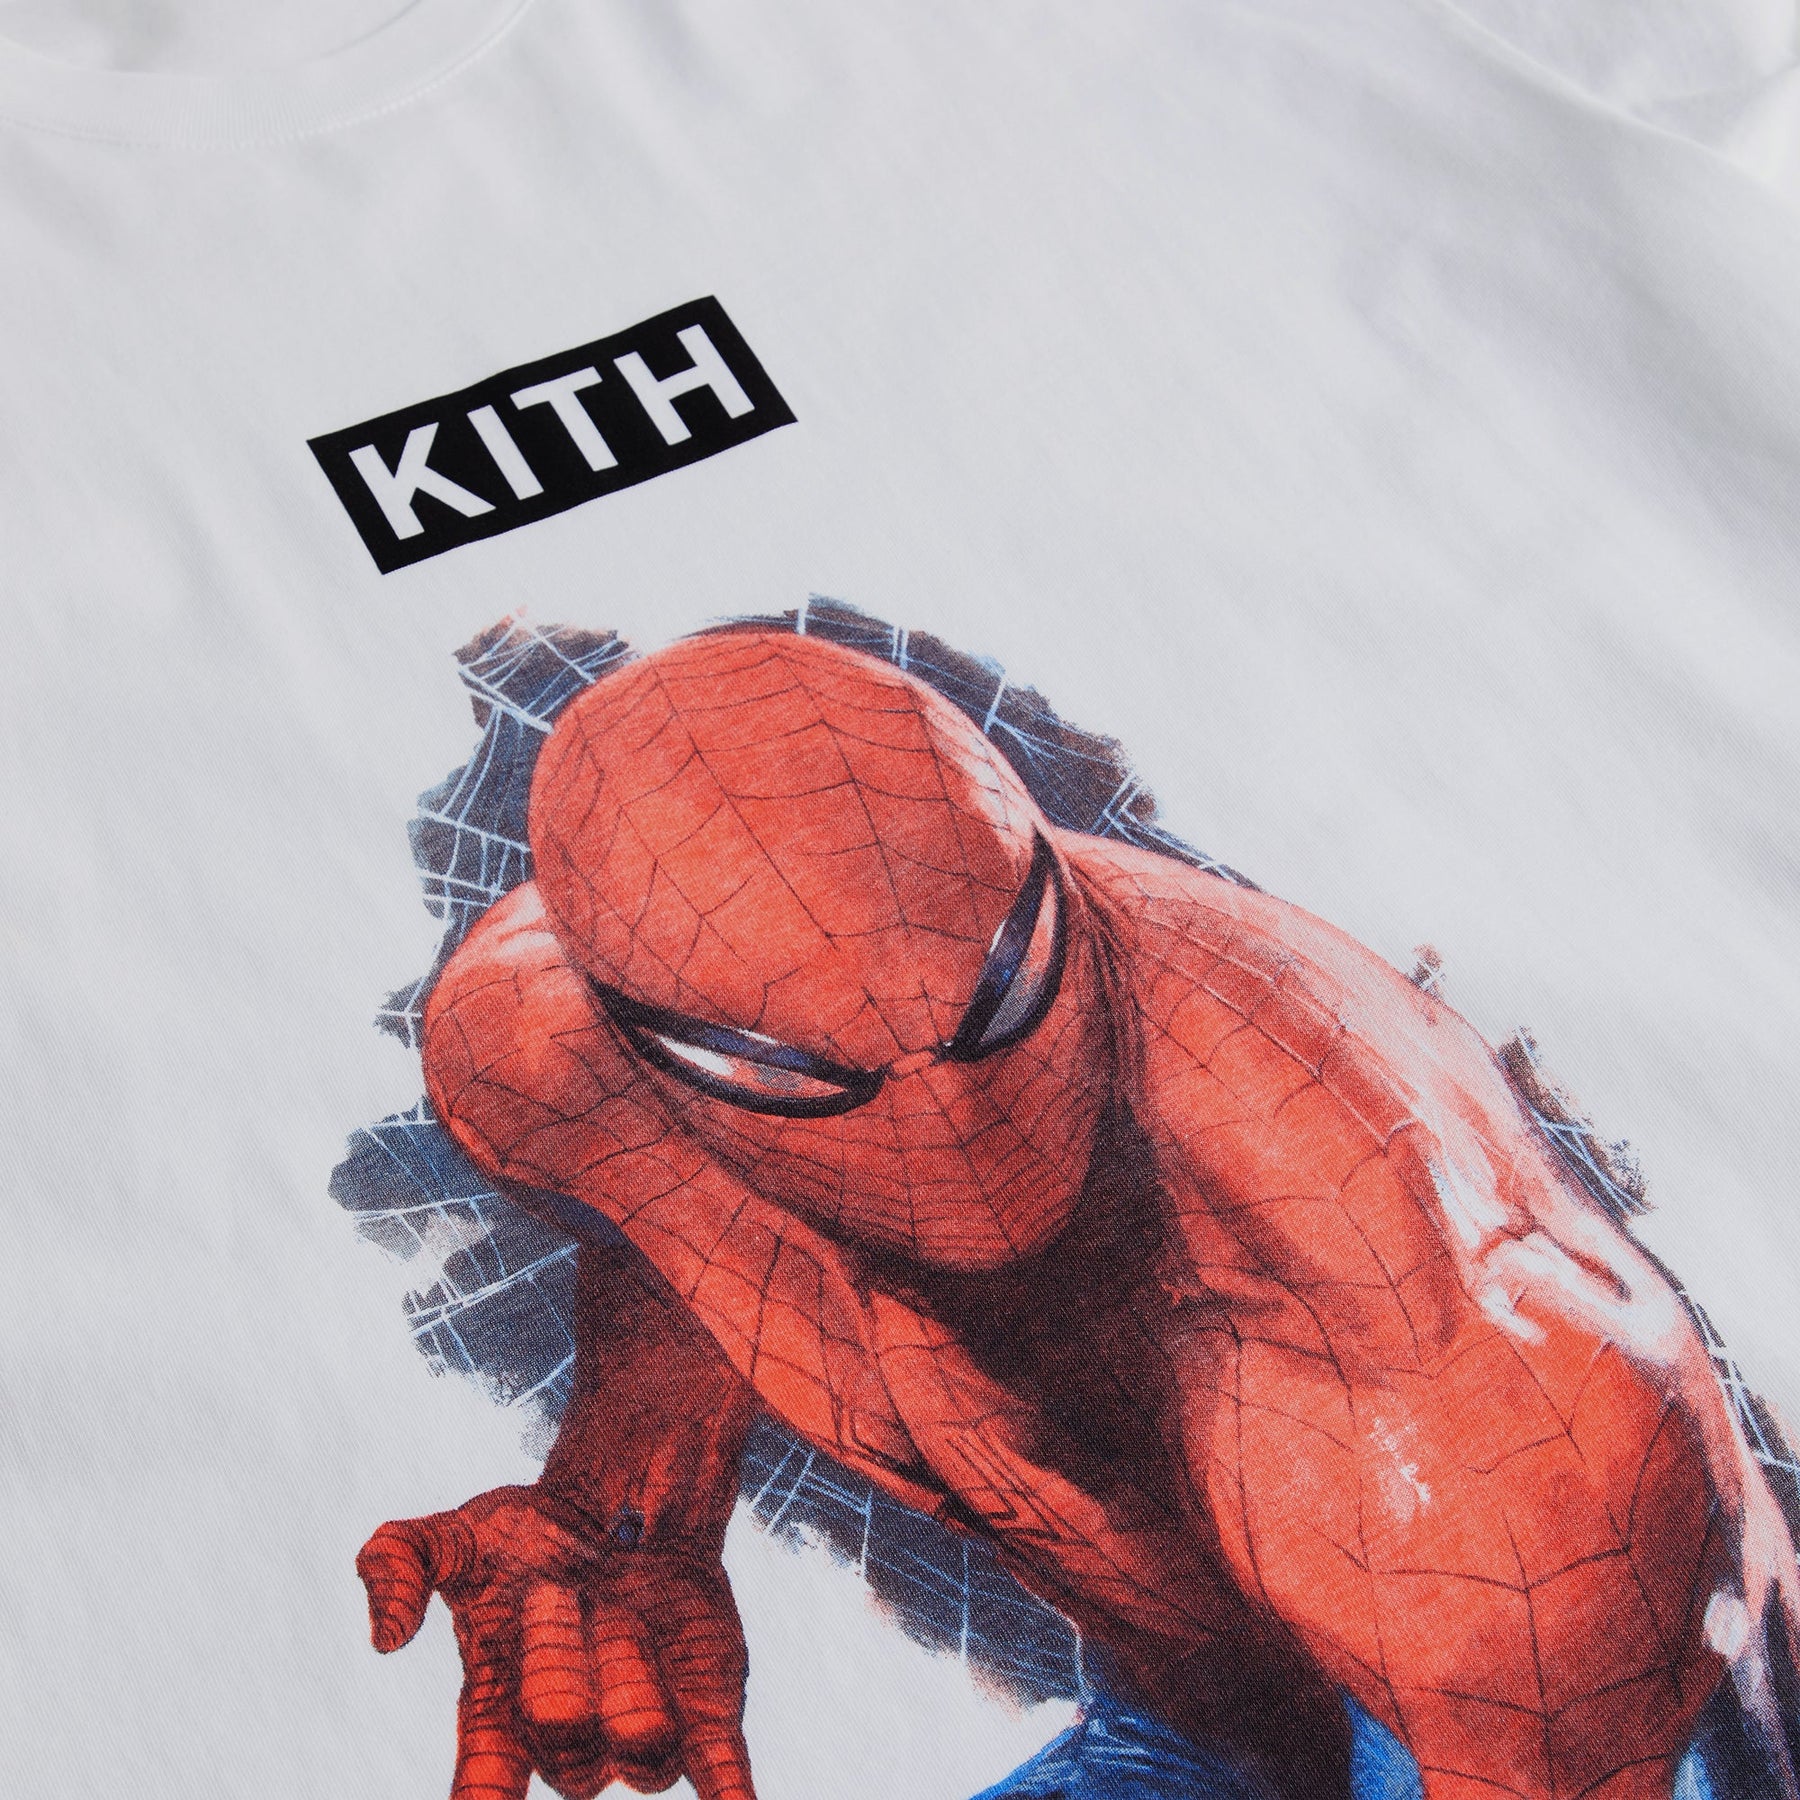 XXL Kith × Marvel Spider-Man スパイダーマン tee-